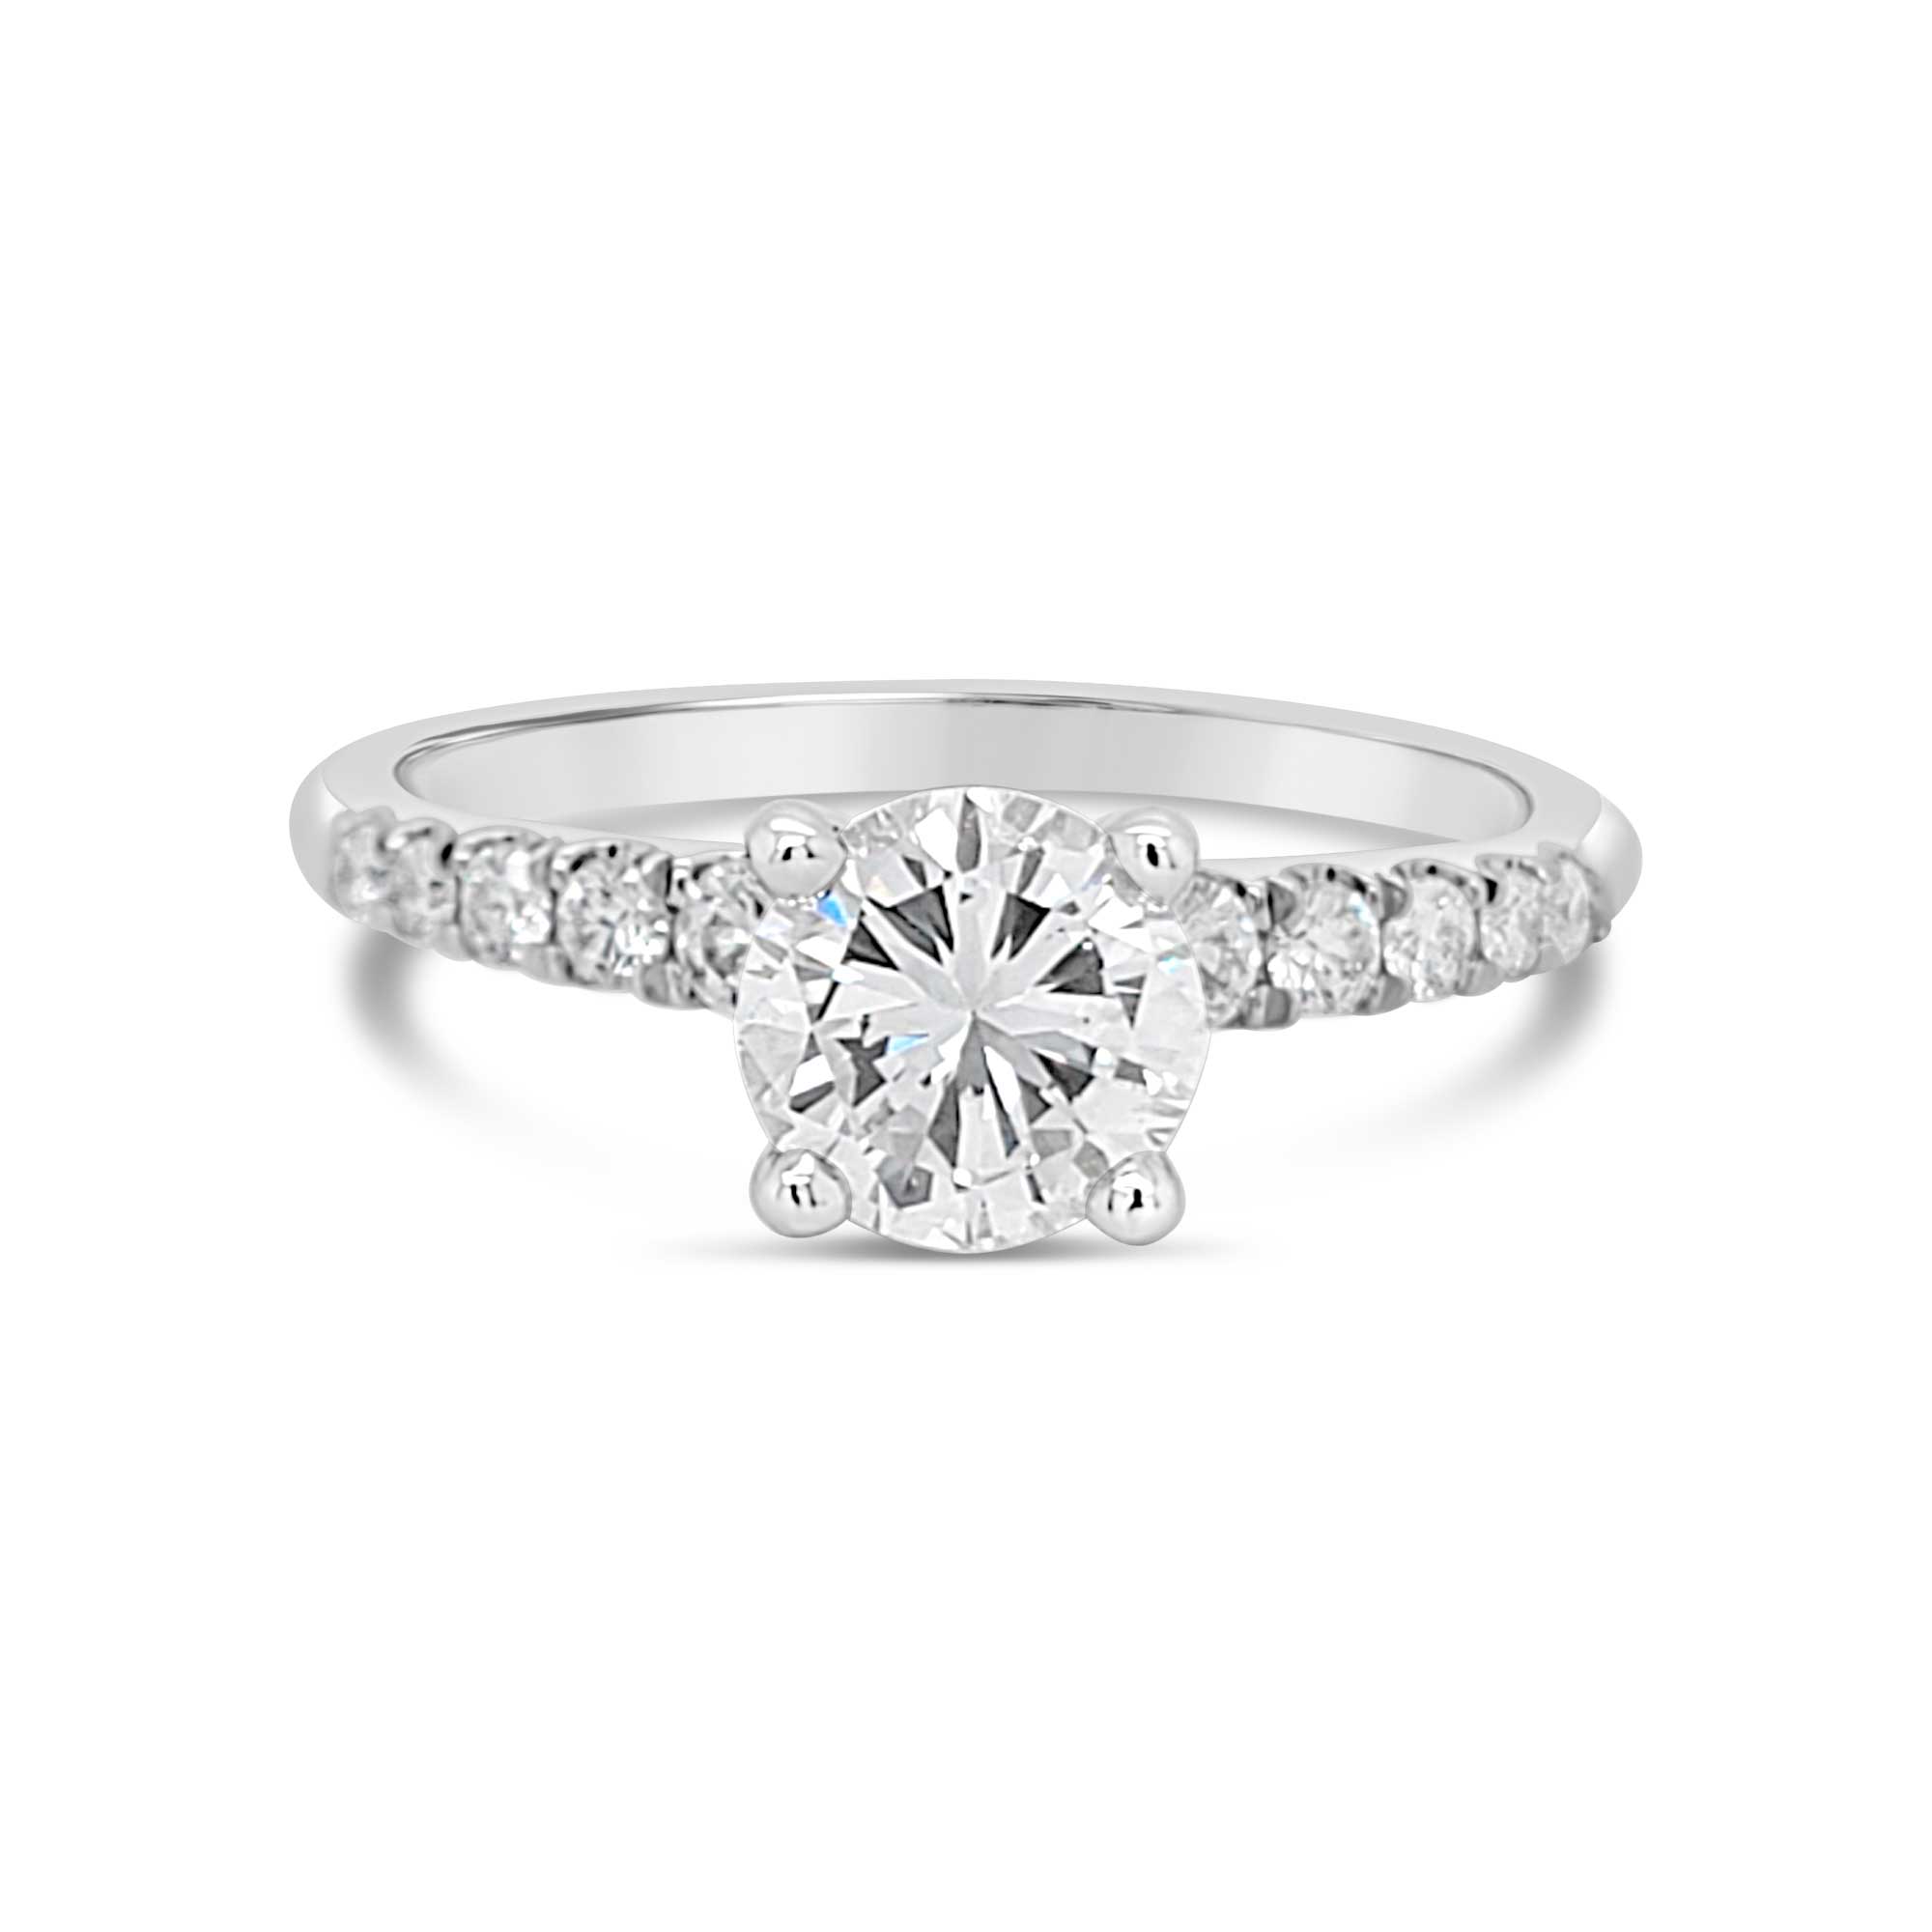 Platinum engagement ring designed with customer's diamonds